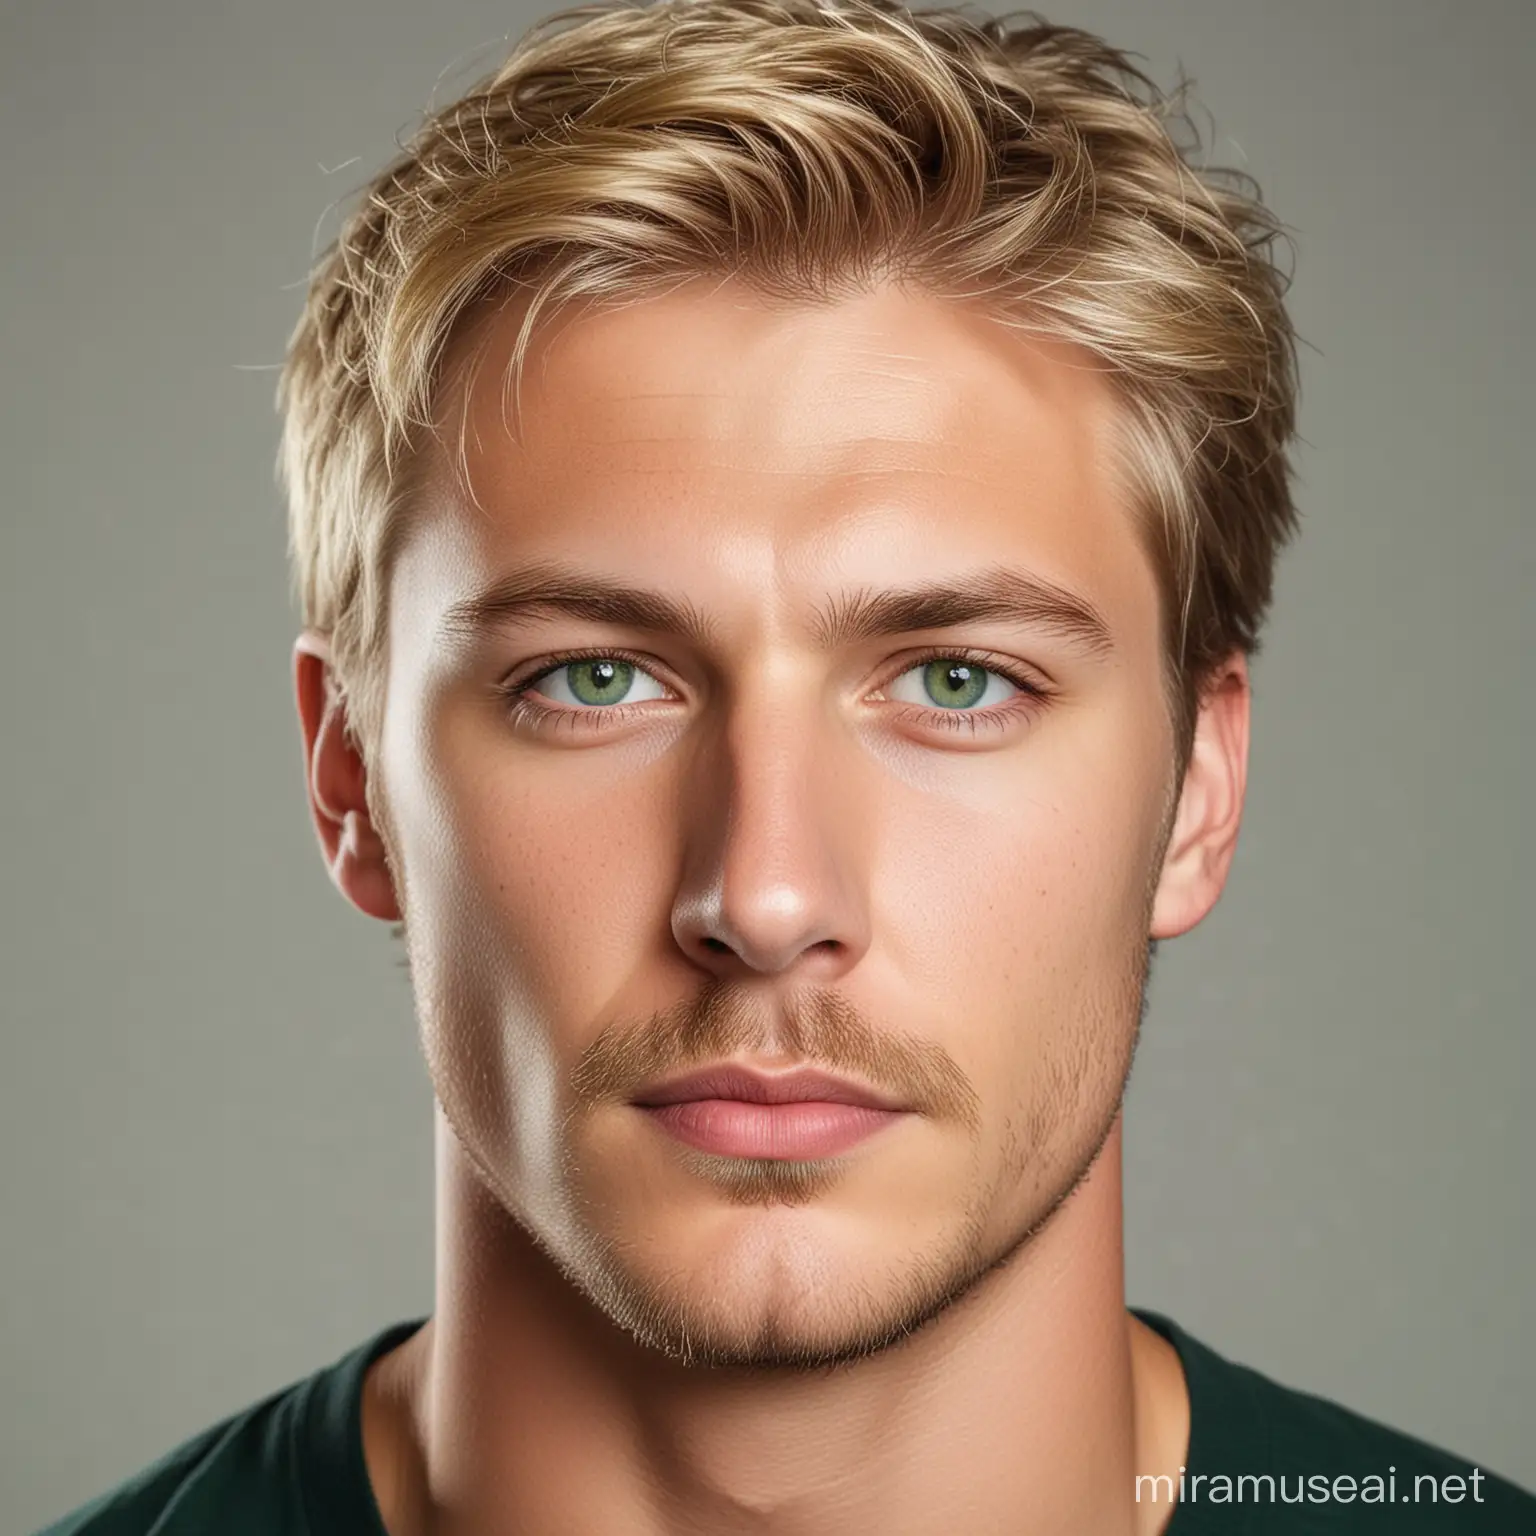 Scandinavian Male, blond hair, green eyes, short moustache, headshot